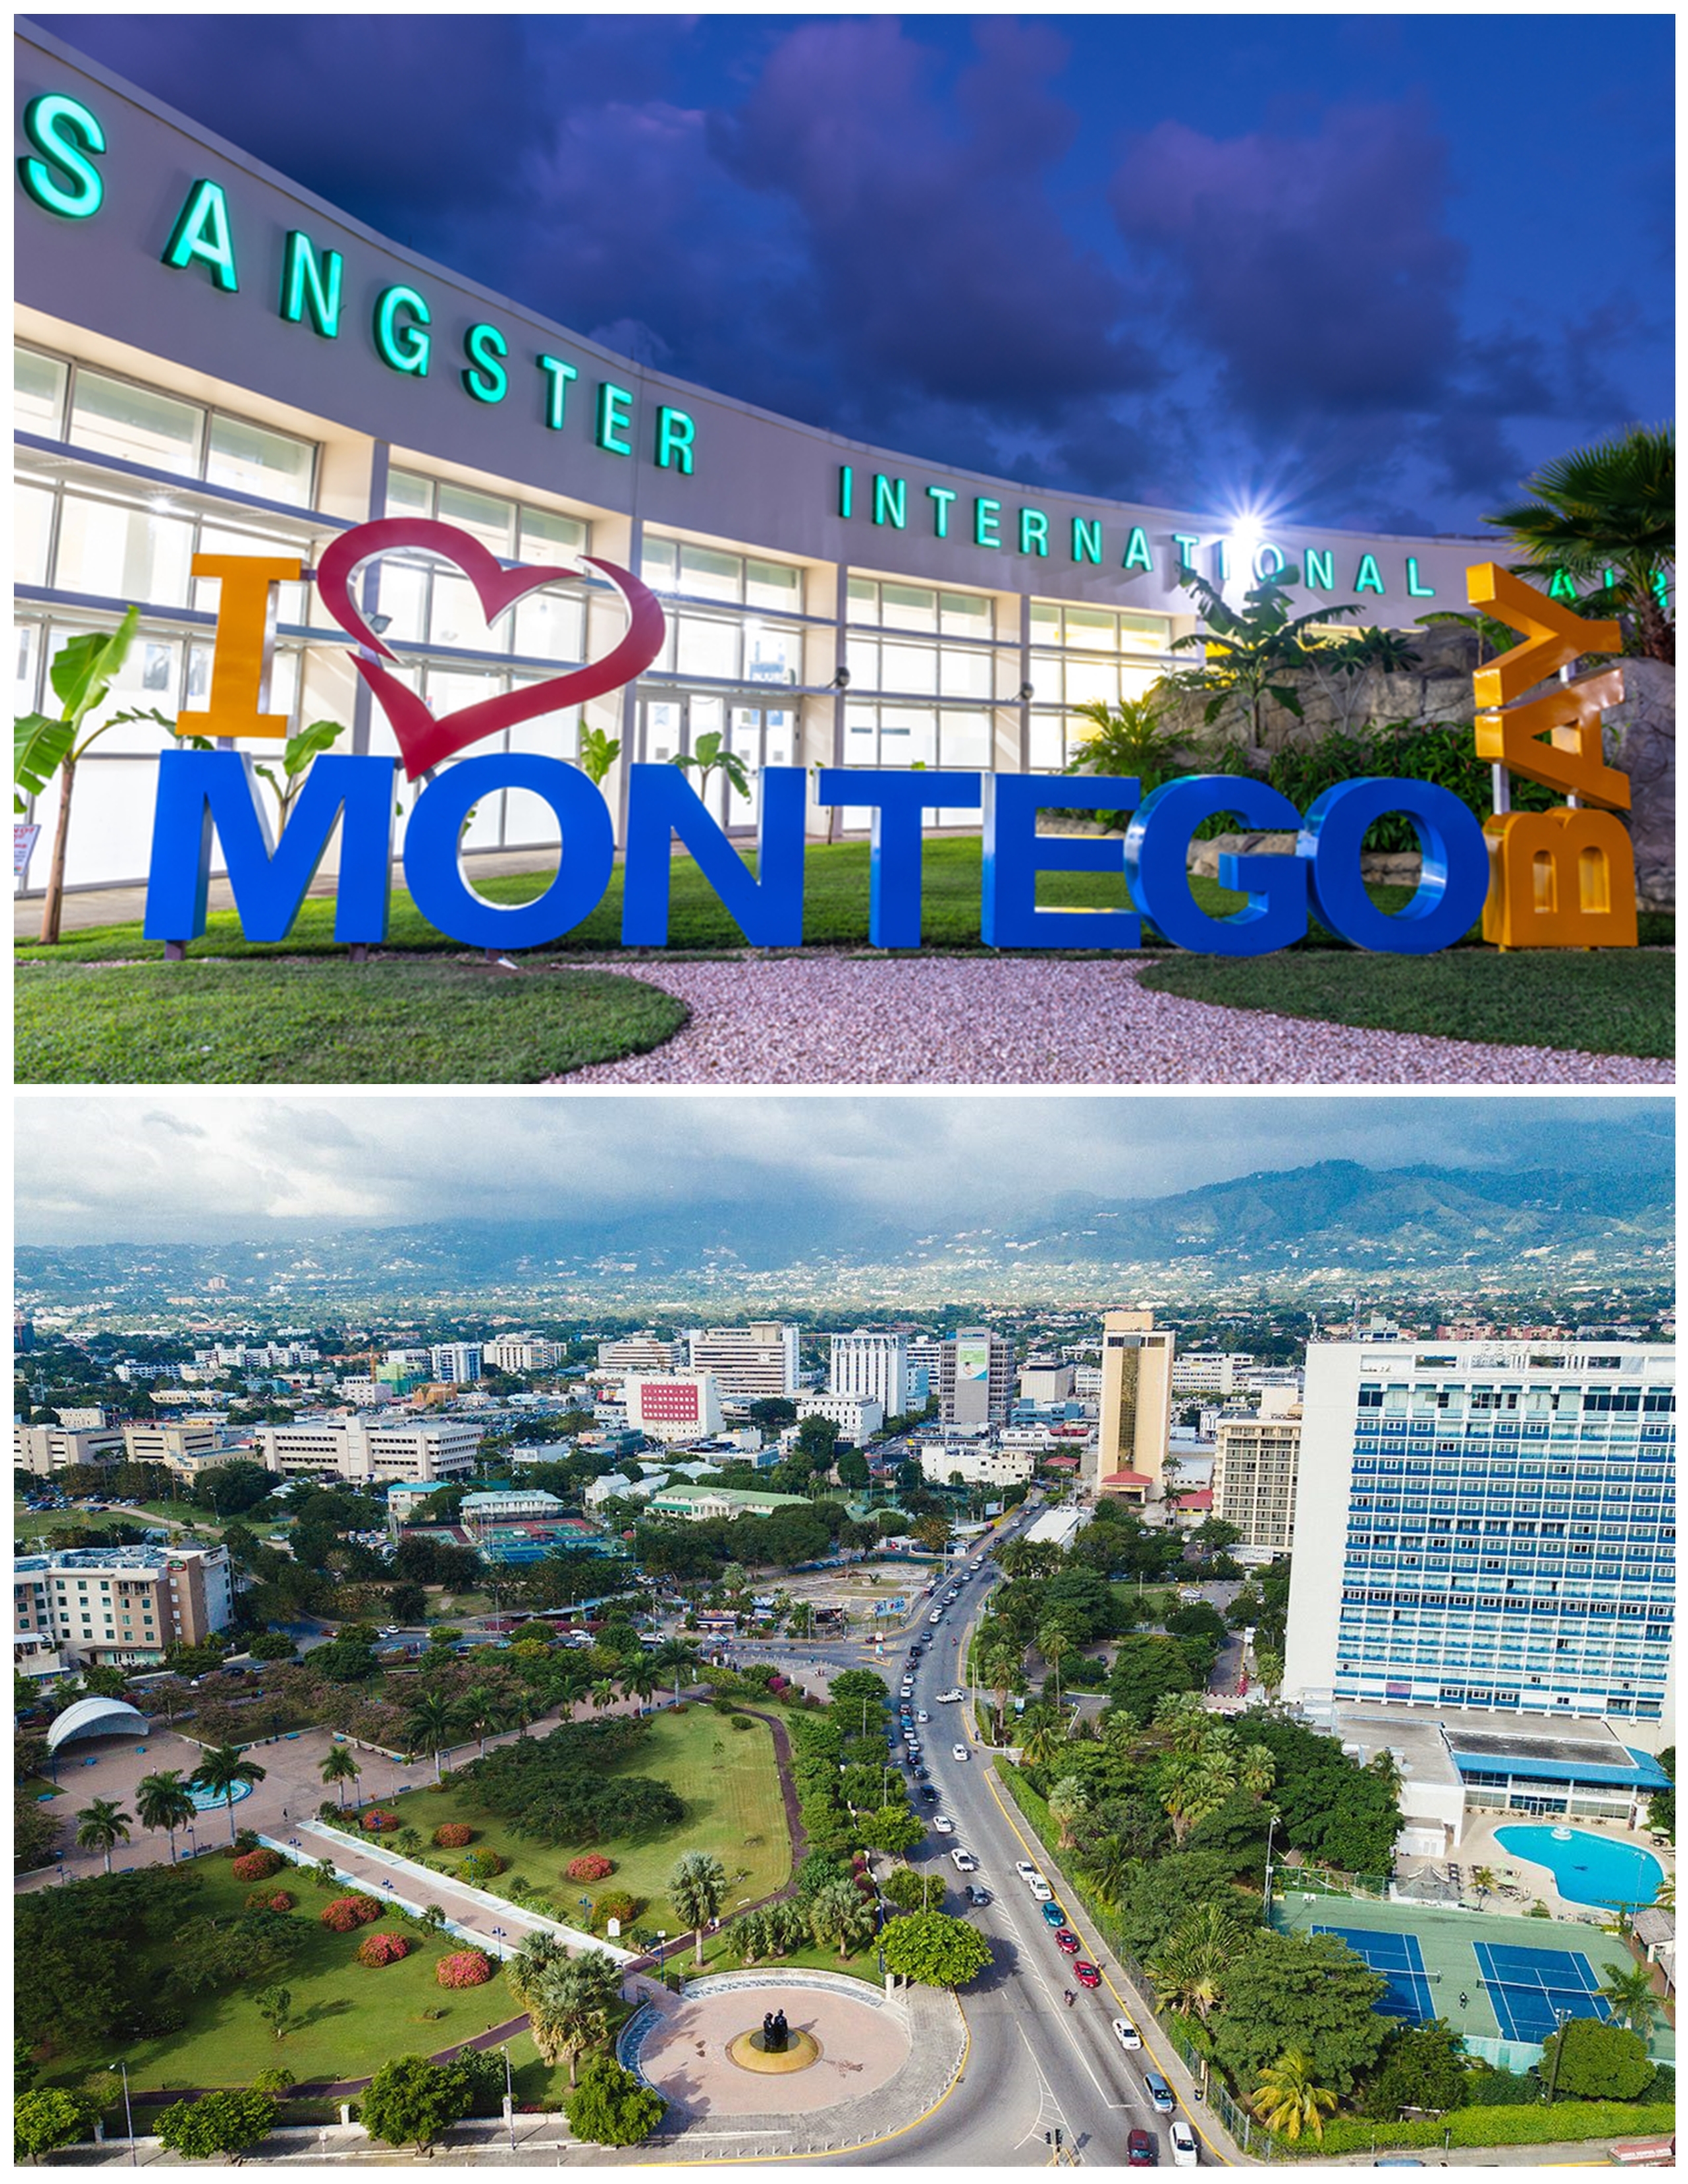 Donald Sangsters International ( Montego bay ) - New Kingston/ Liguanea Area